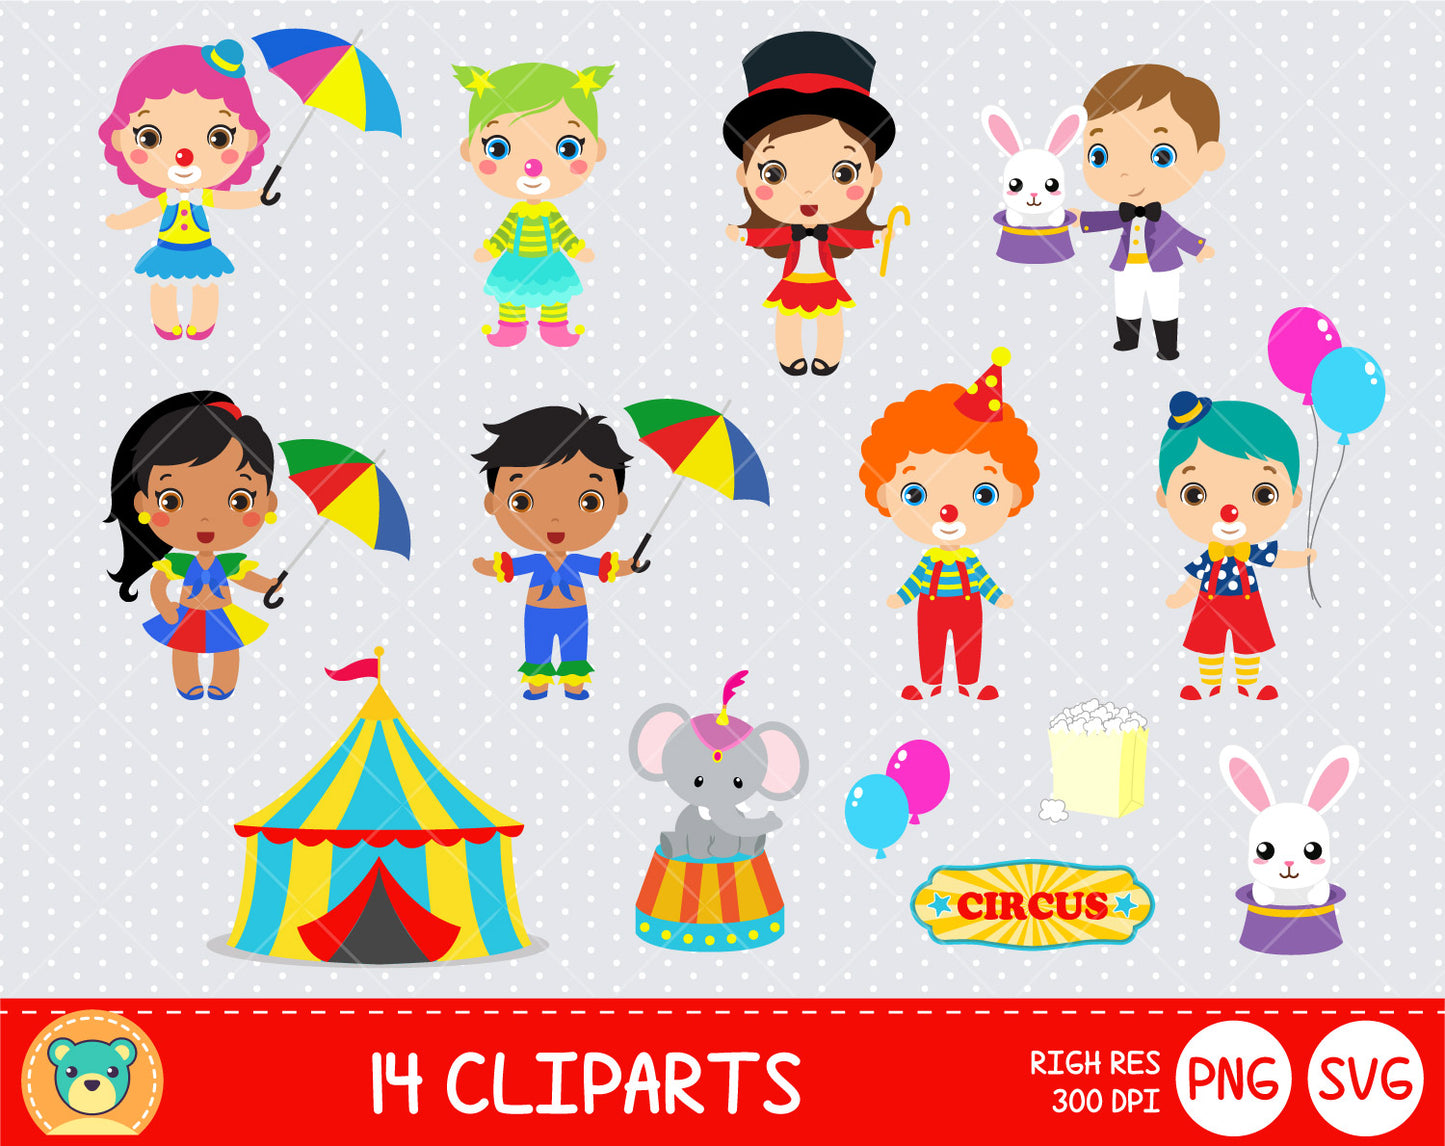 Cute Circus clipart set, Digital clip art for decoration, scrapbooking, PNG, SVG, instant download